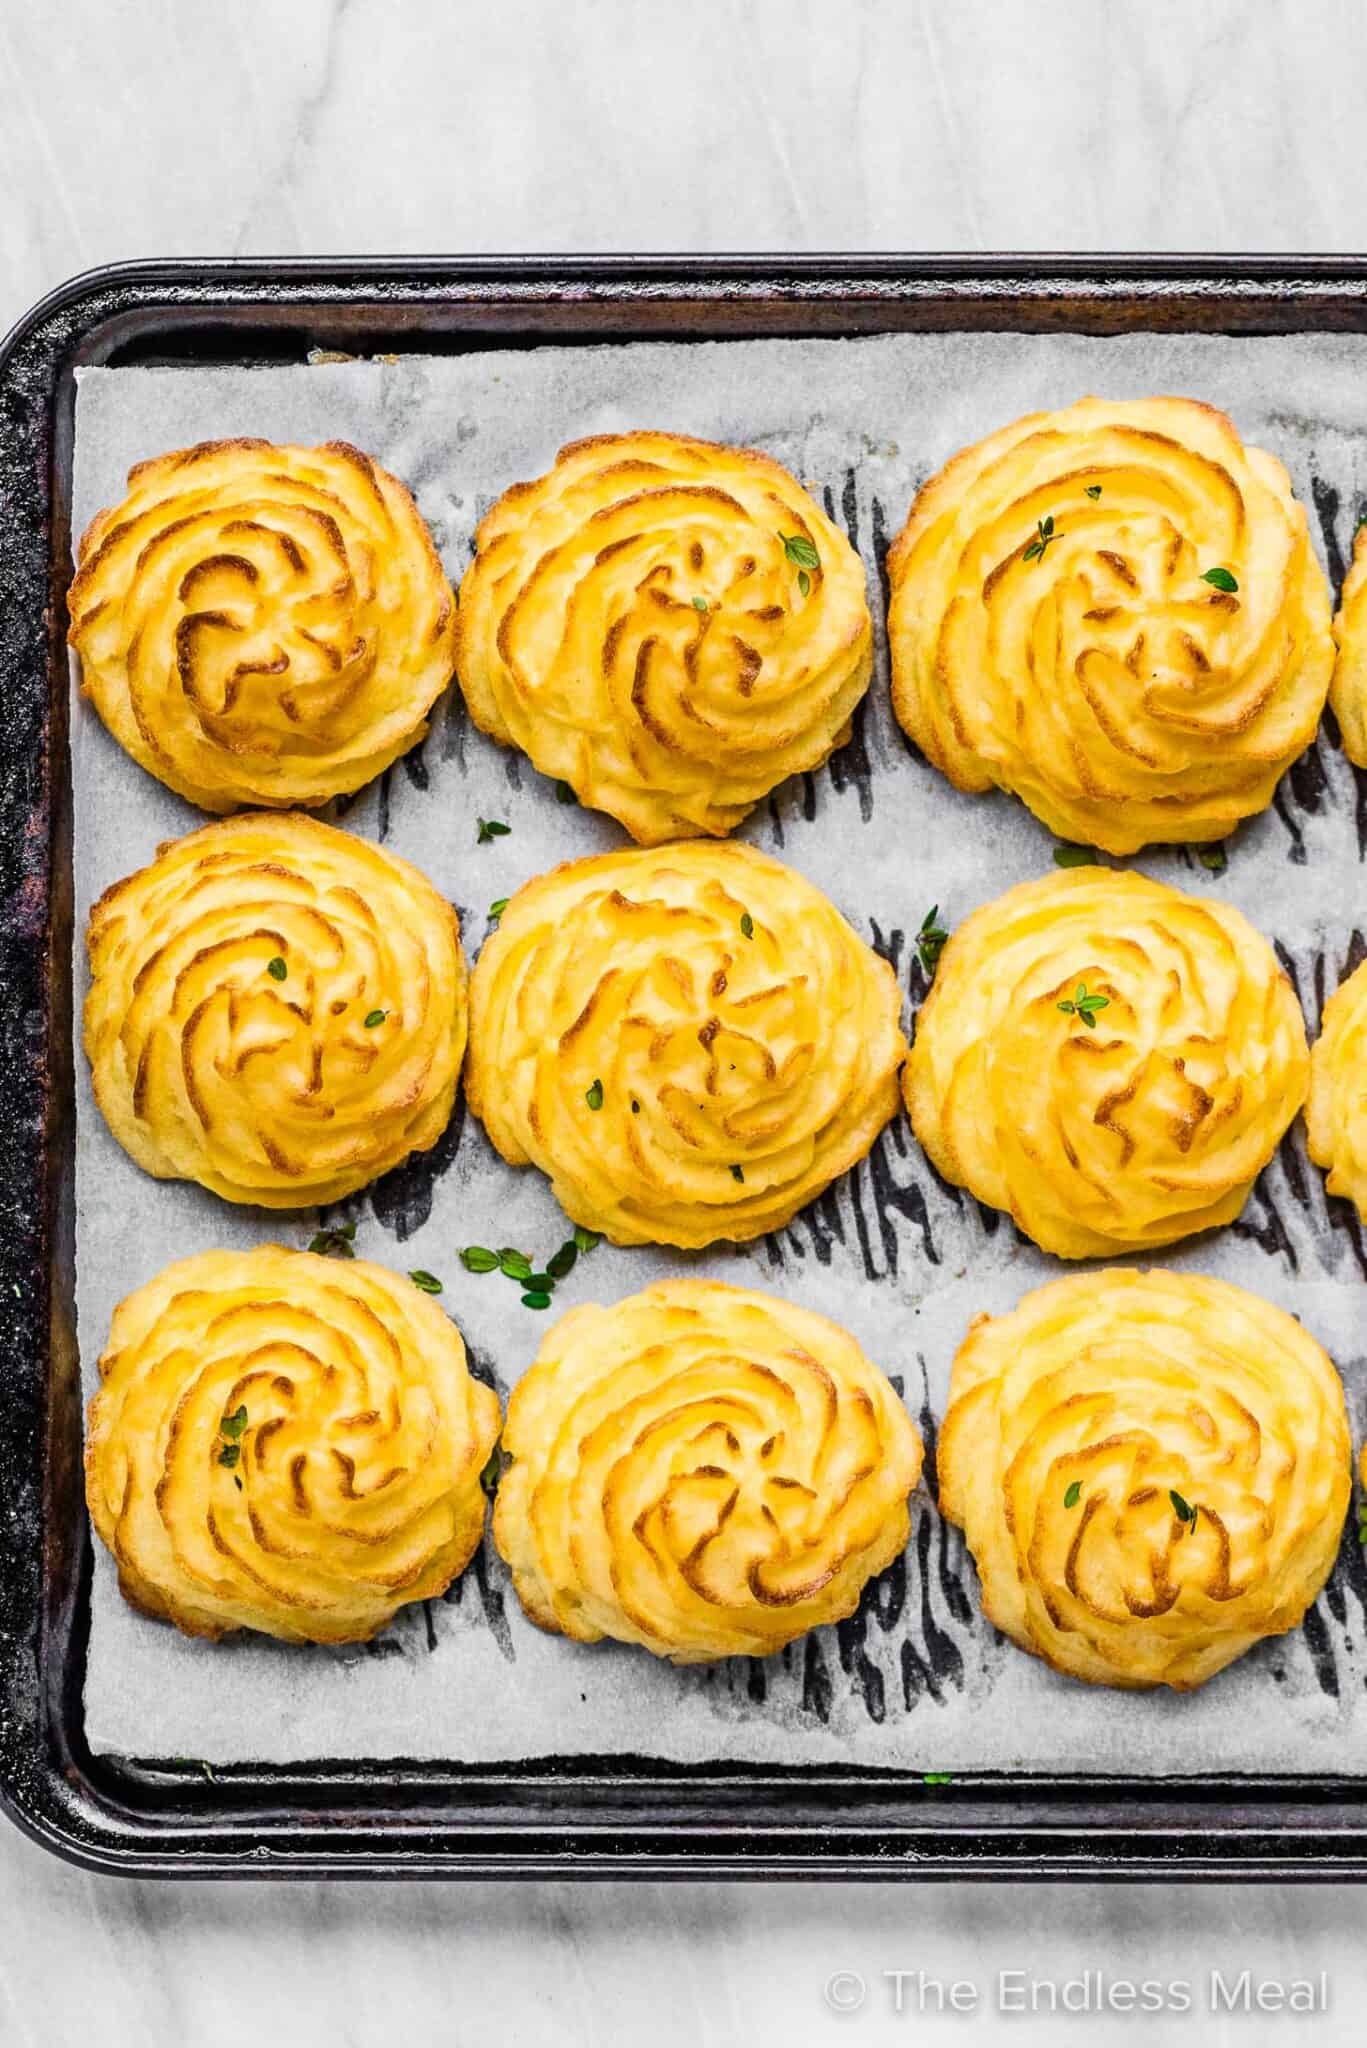 9 duchess potatoes lined up on a baking sheet.